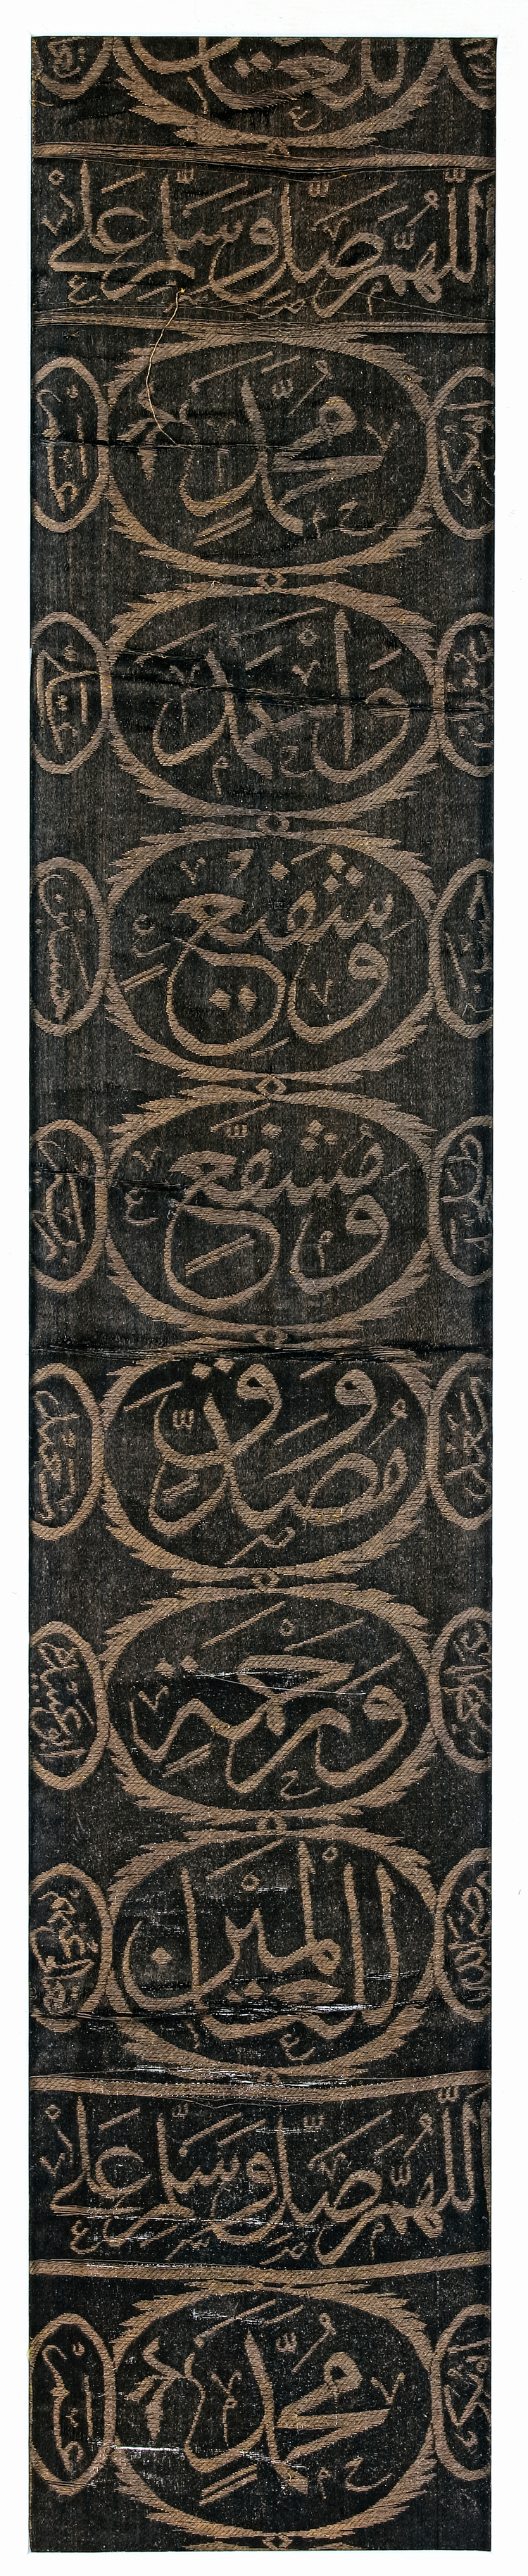 AN OTTOMAN SILK AND METAL-THREAD CALLIGRAPHIC FRAGMENT , TURKEY, 17TH CENTURY